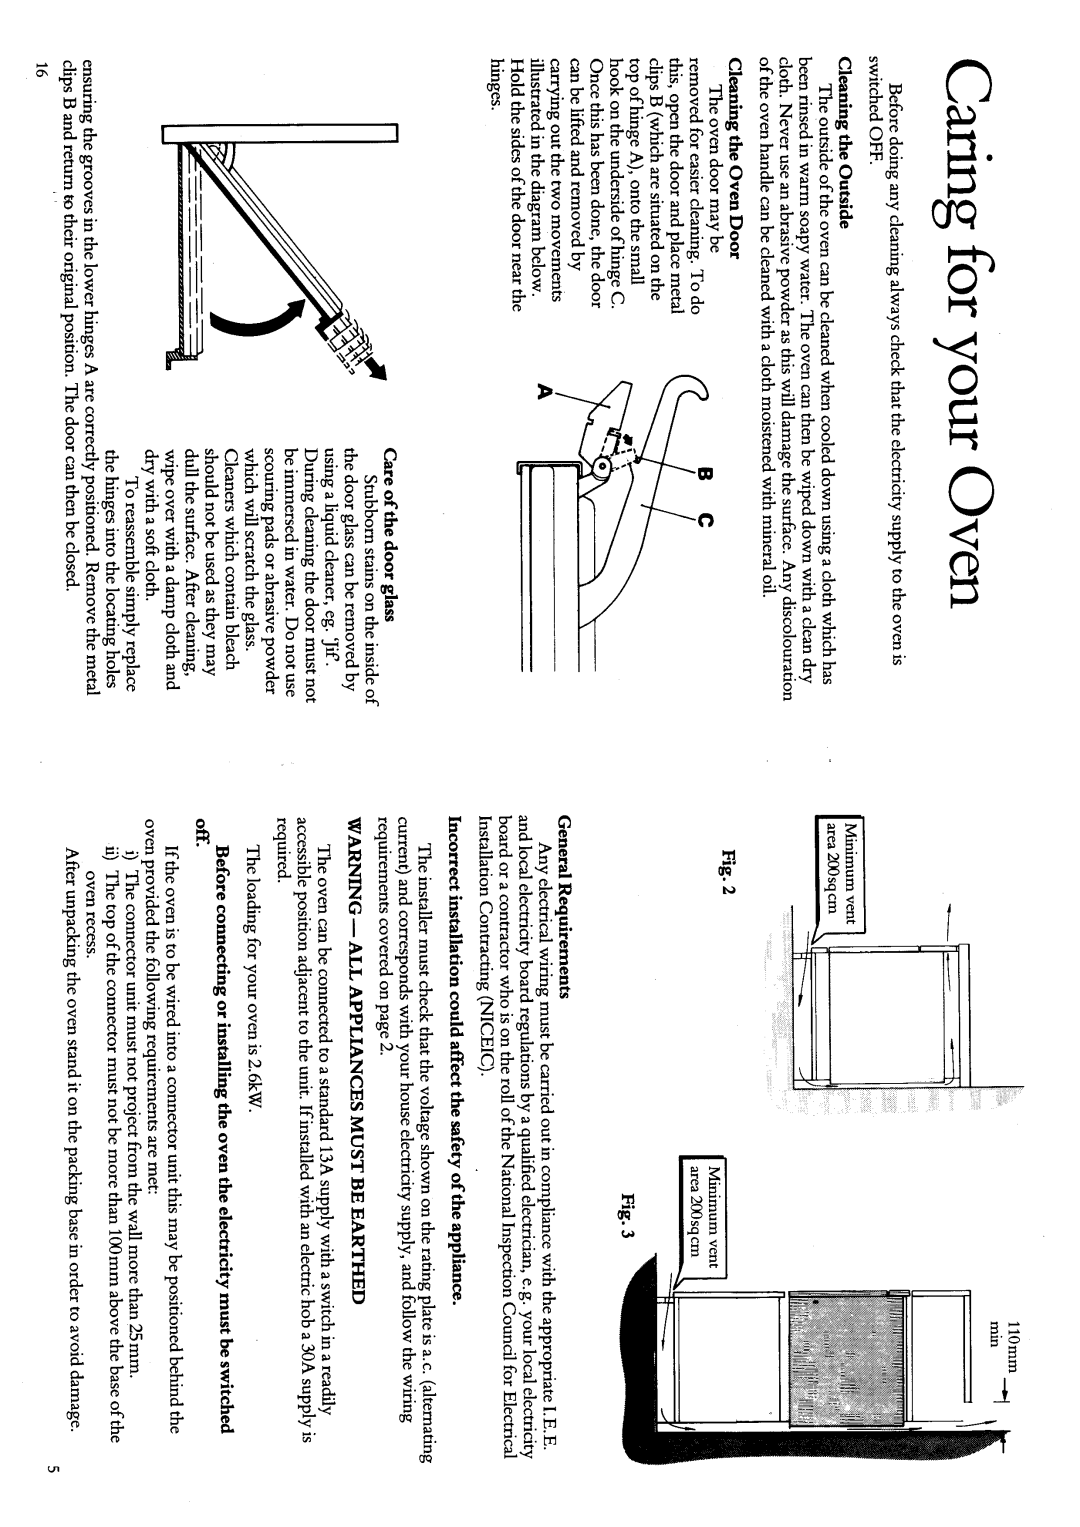 Hotpoint 6100 manual 